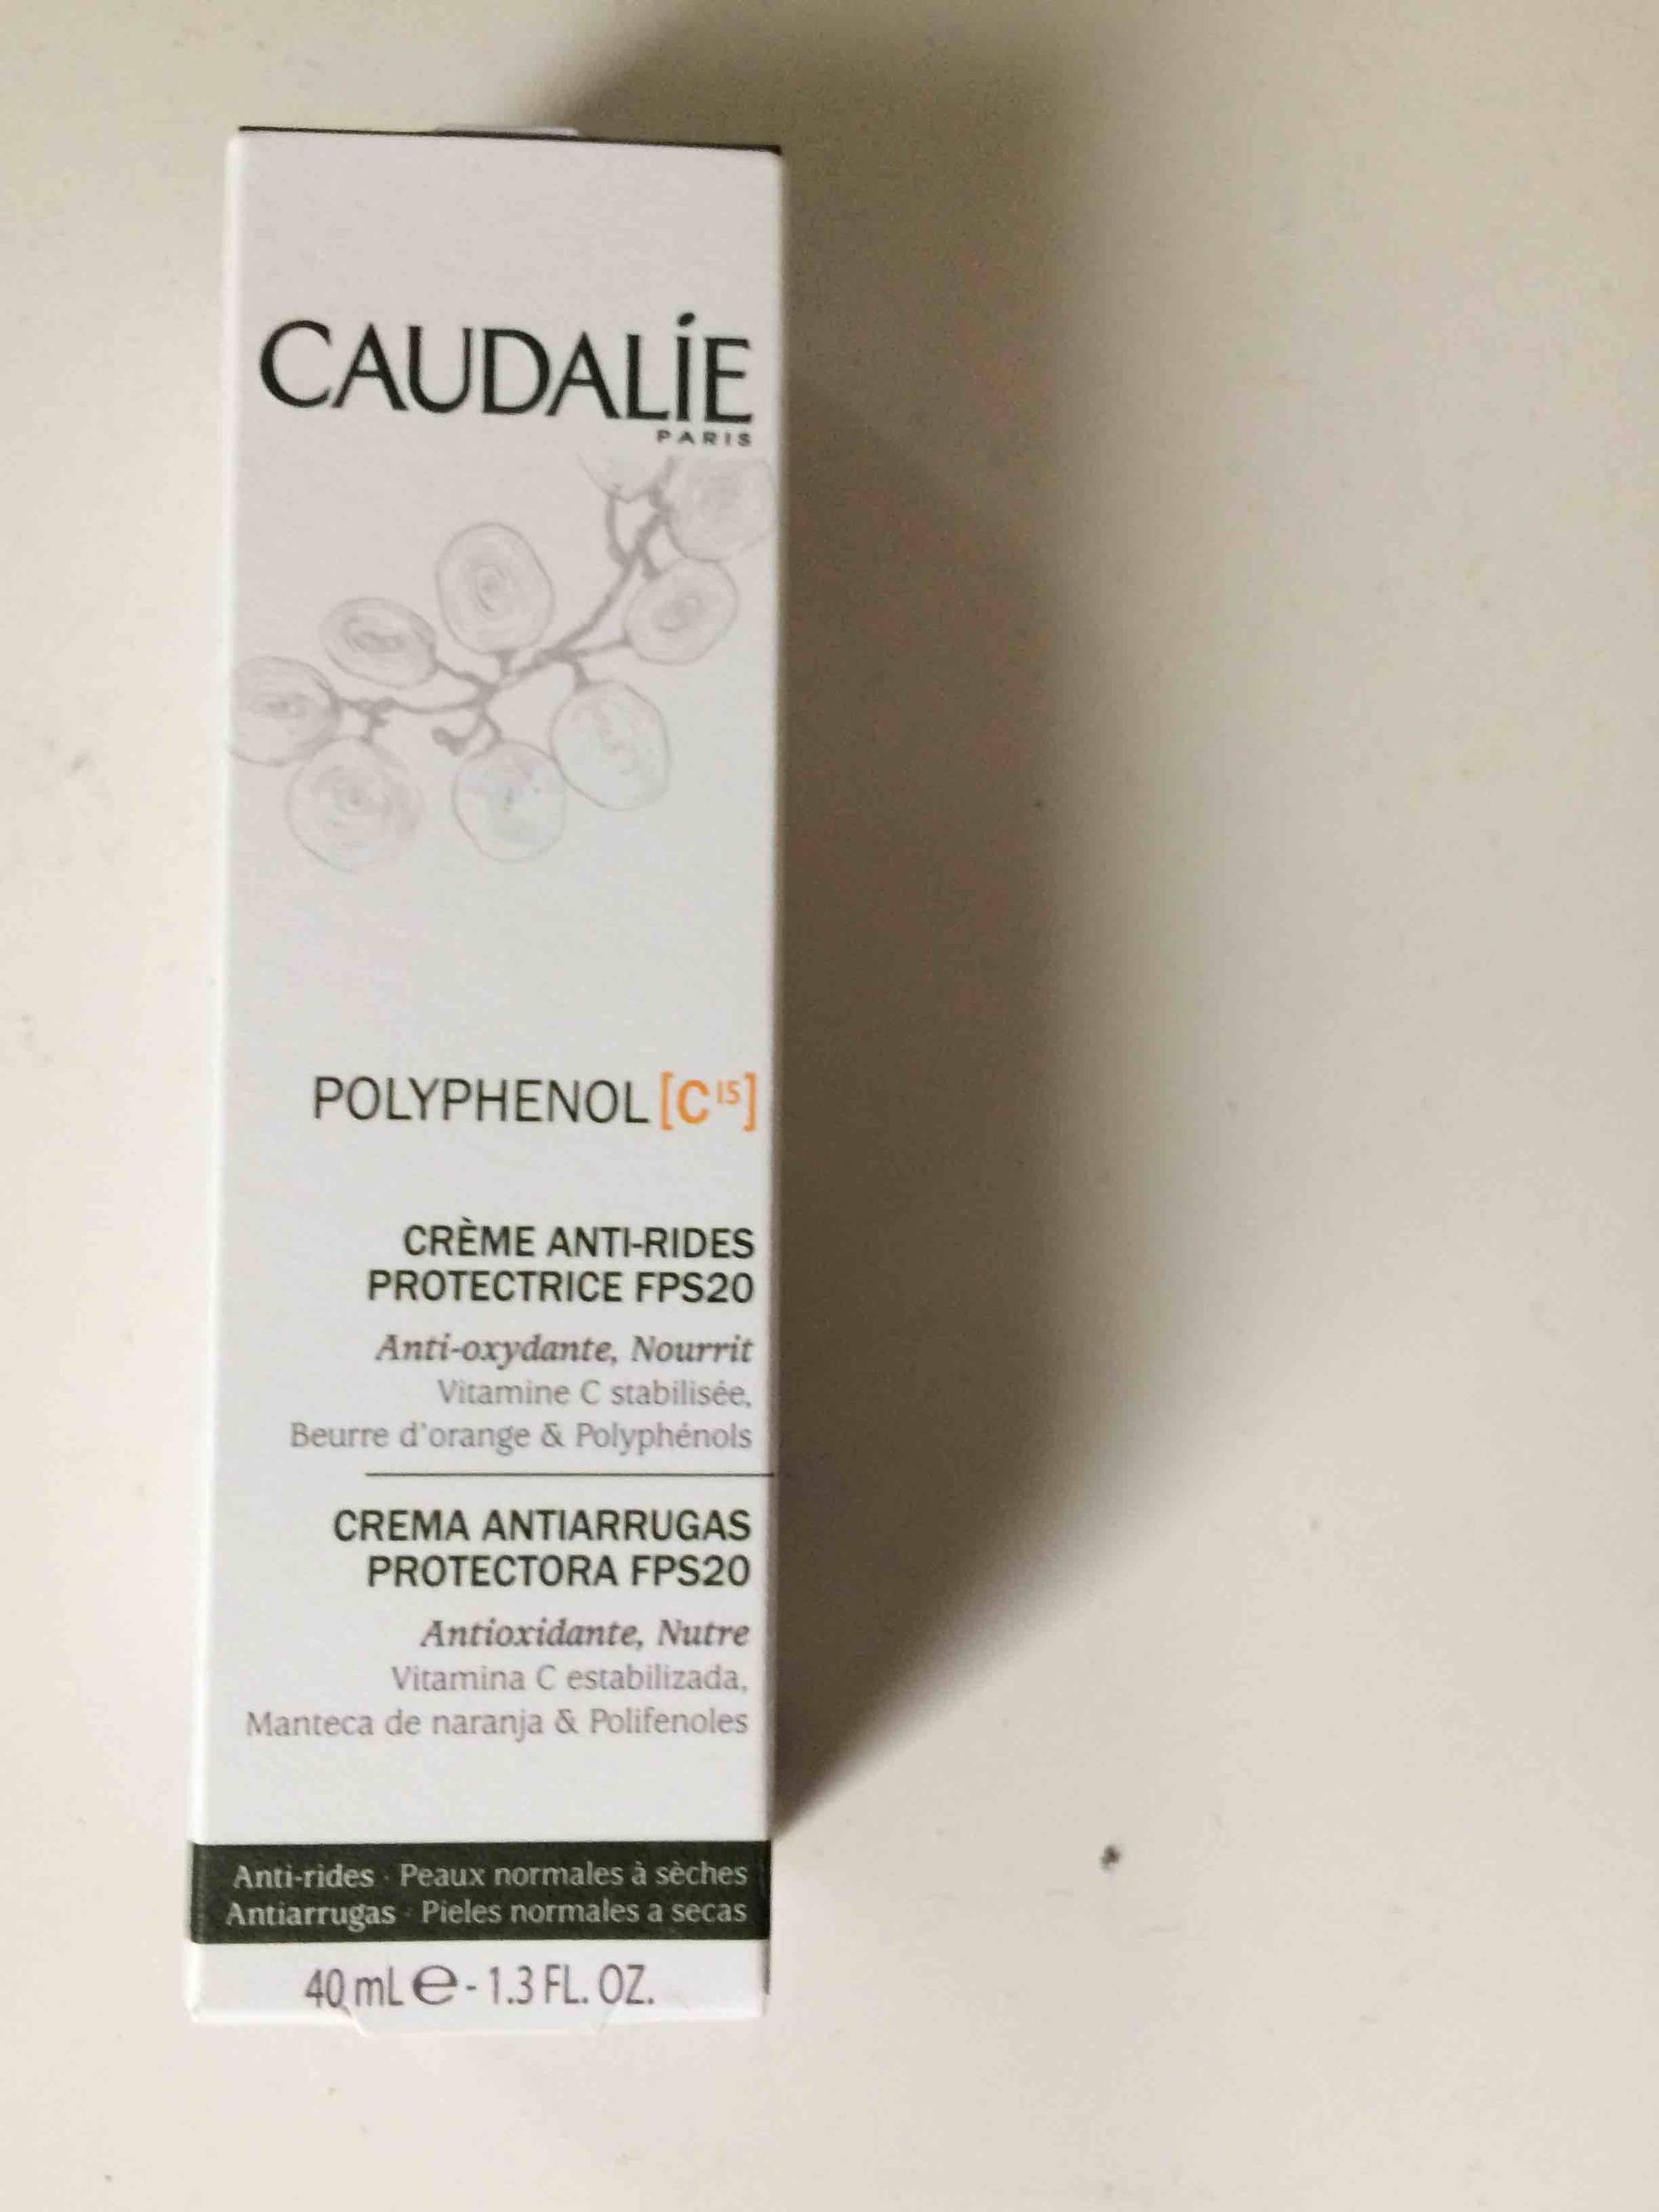 CAUDALIE - Polyphenol c15 - Crème anti-rides protectrice fps 20 